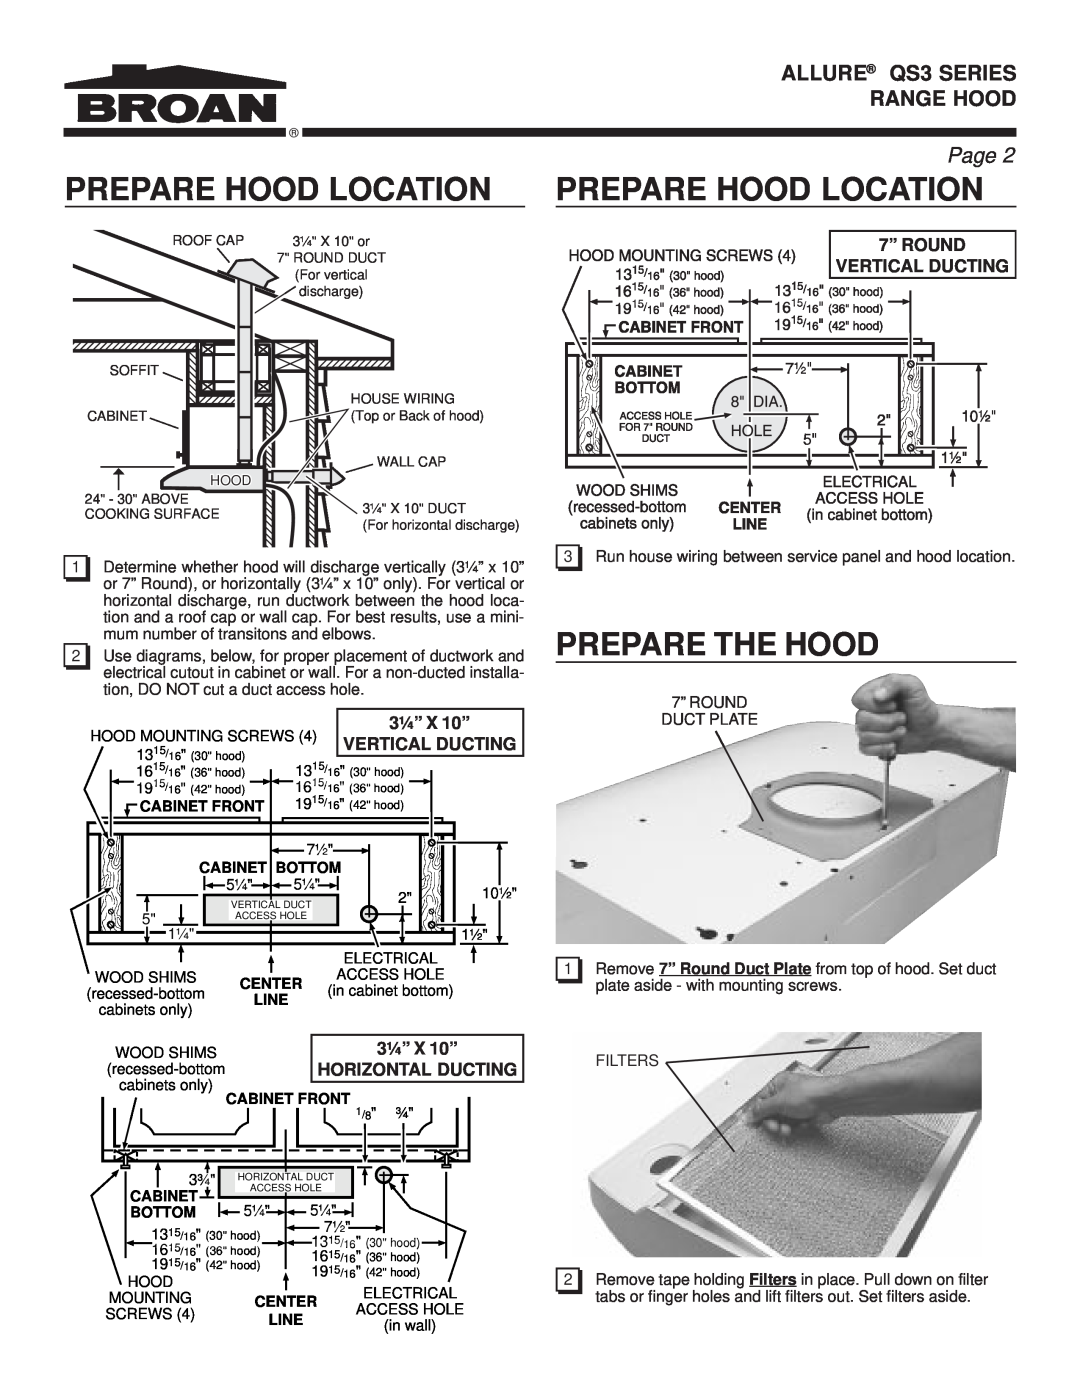 Broan QS3 Prepare Hood Location Prepare Hood Location, Prepare The Hood, 7” ROUND VERTICAL DUCTING, Vertical Ducting, Page 